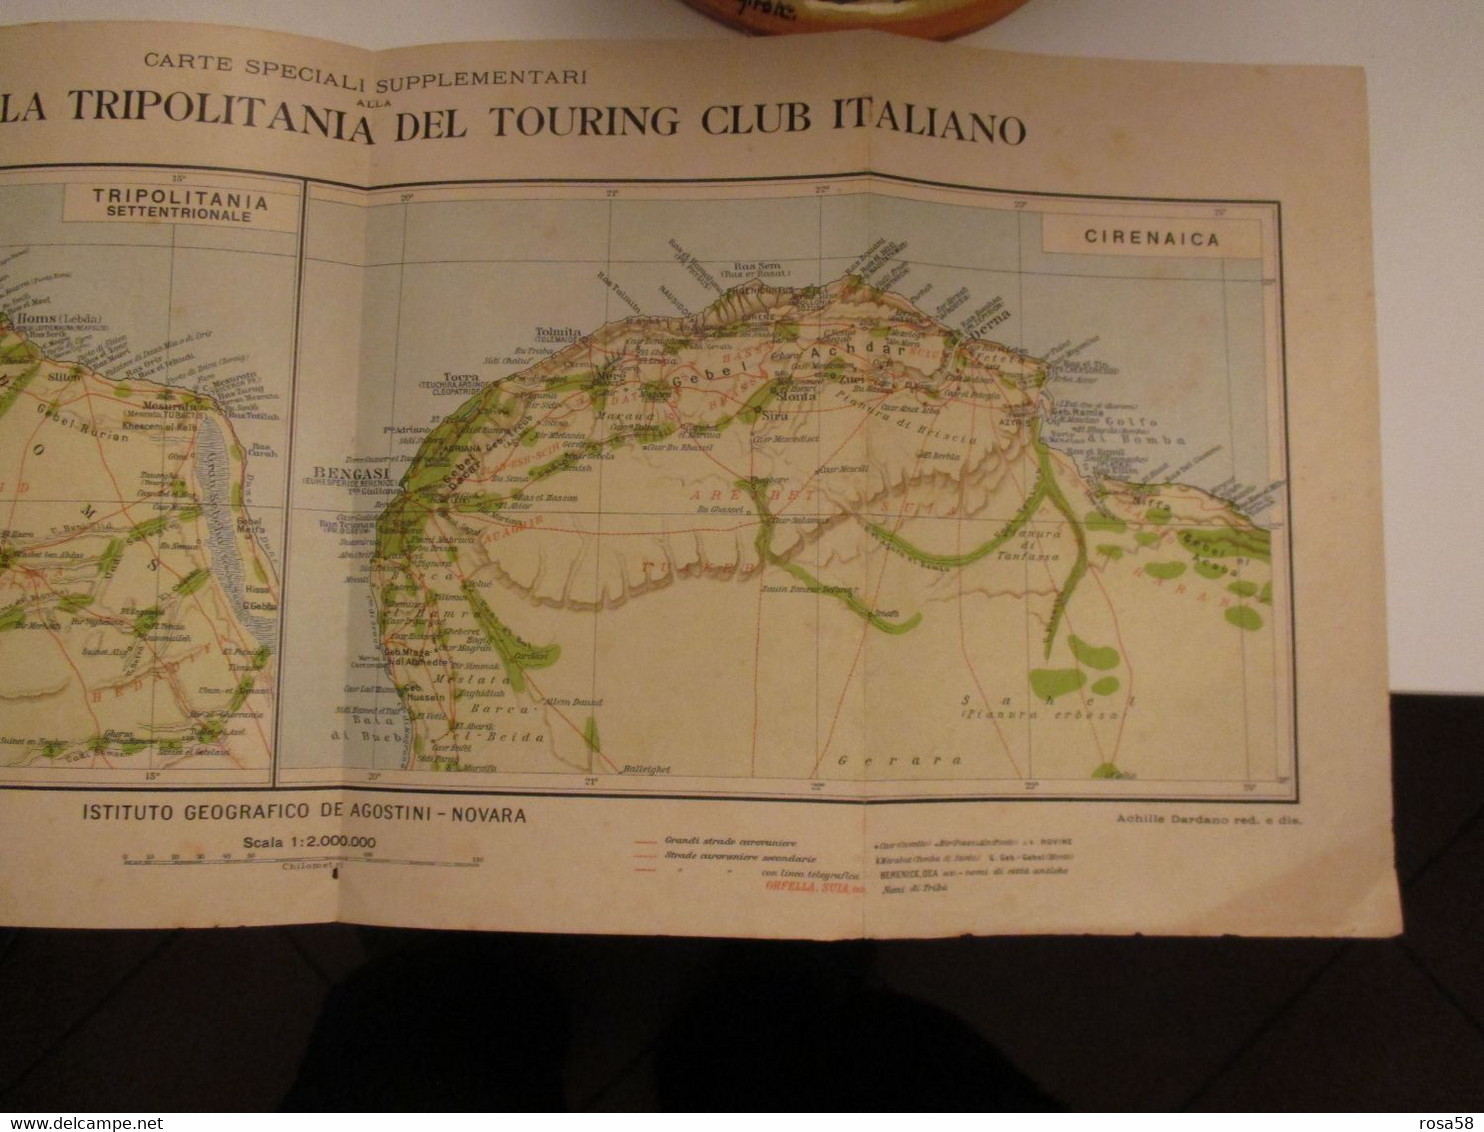 AFRICA Libia Carta Geografica Edizione DE AGOSTINI Novara  Cirenaica Tripolitania Touring Club Italiano Coloinie Italian - Welt